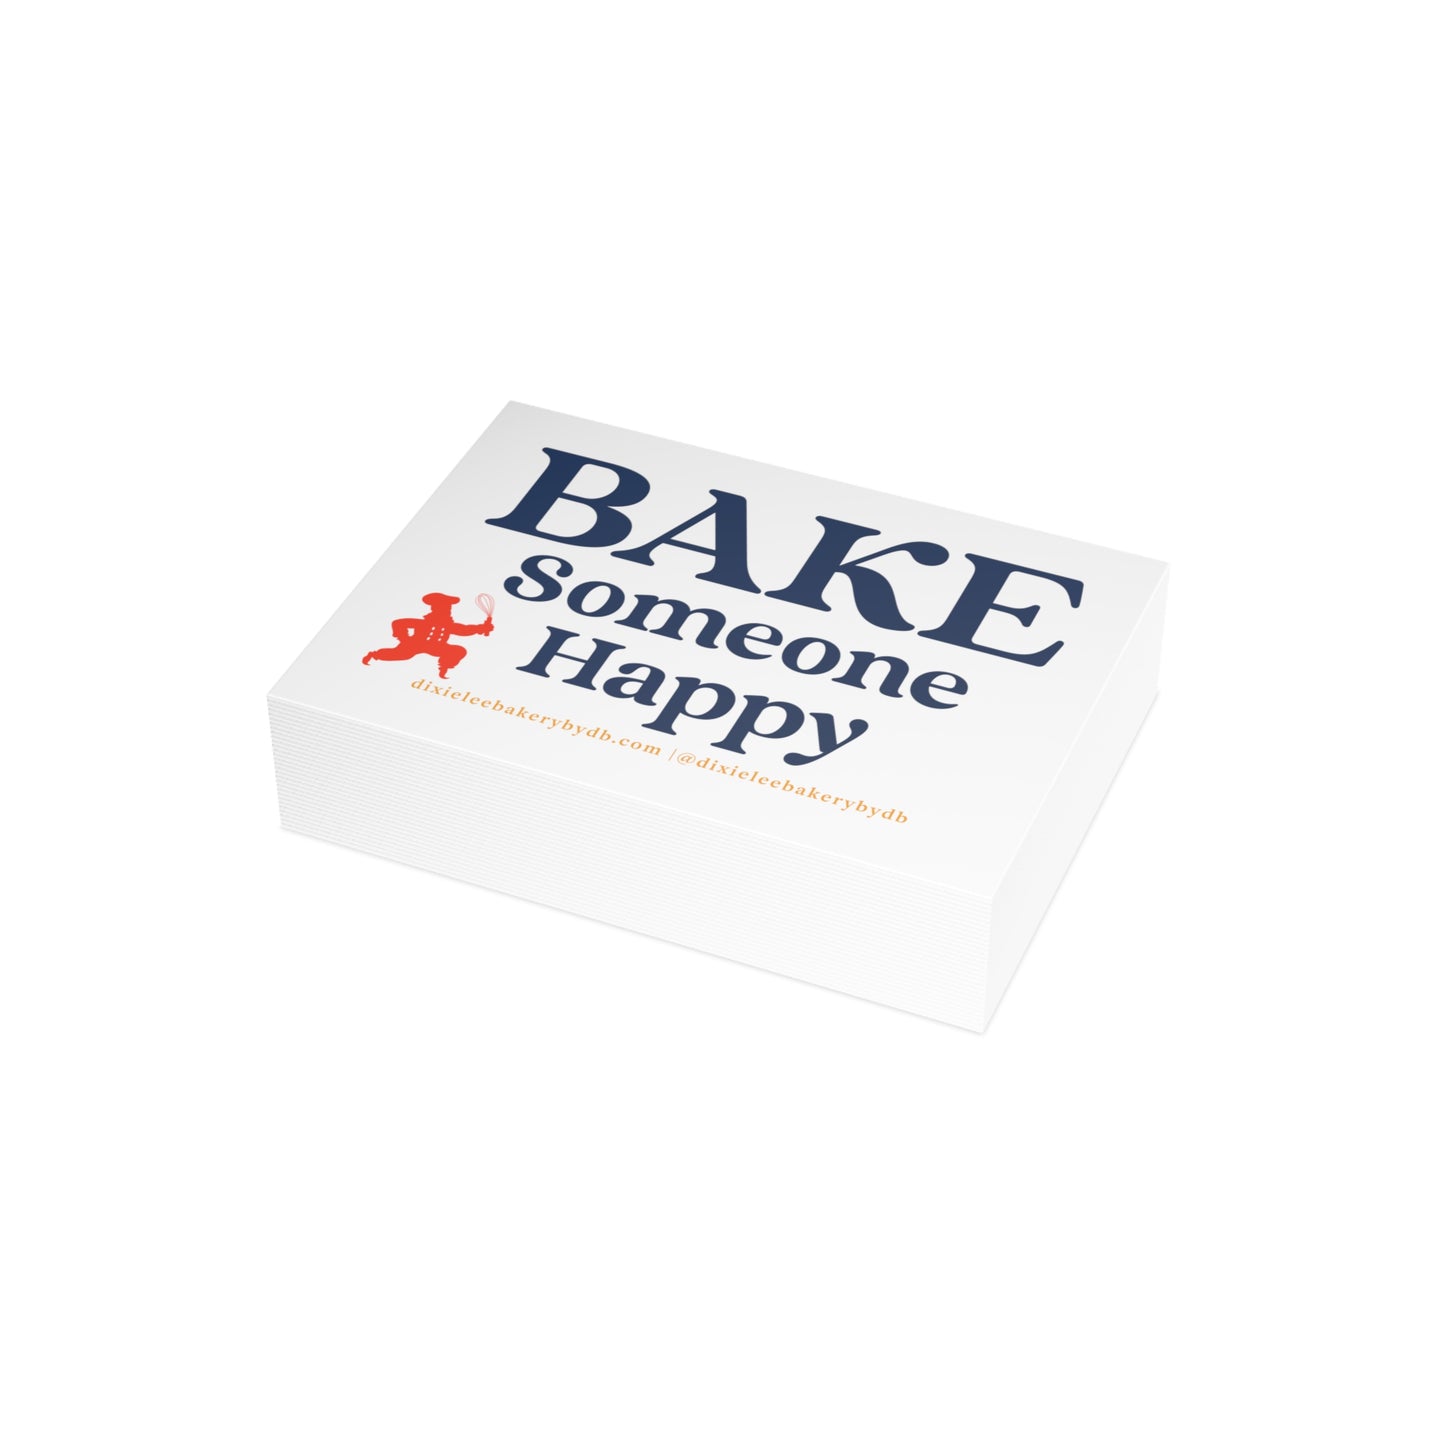 Chef David Burke "Bake Someone Happy" Postcard or Recipe Card Set